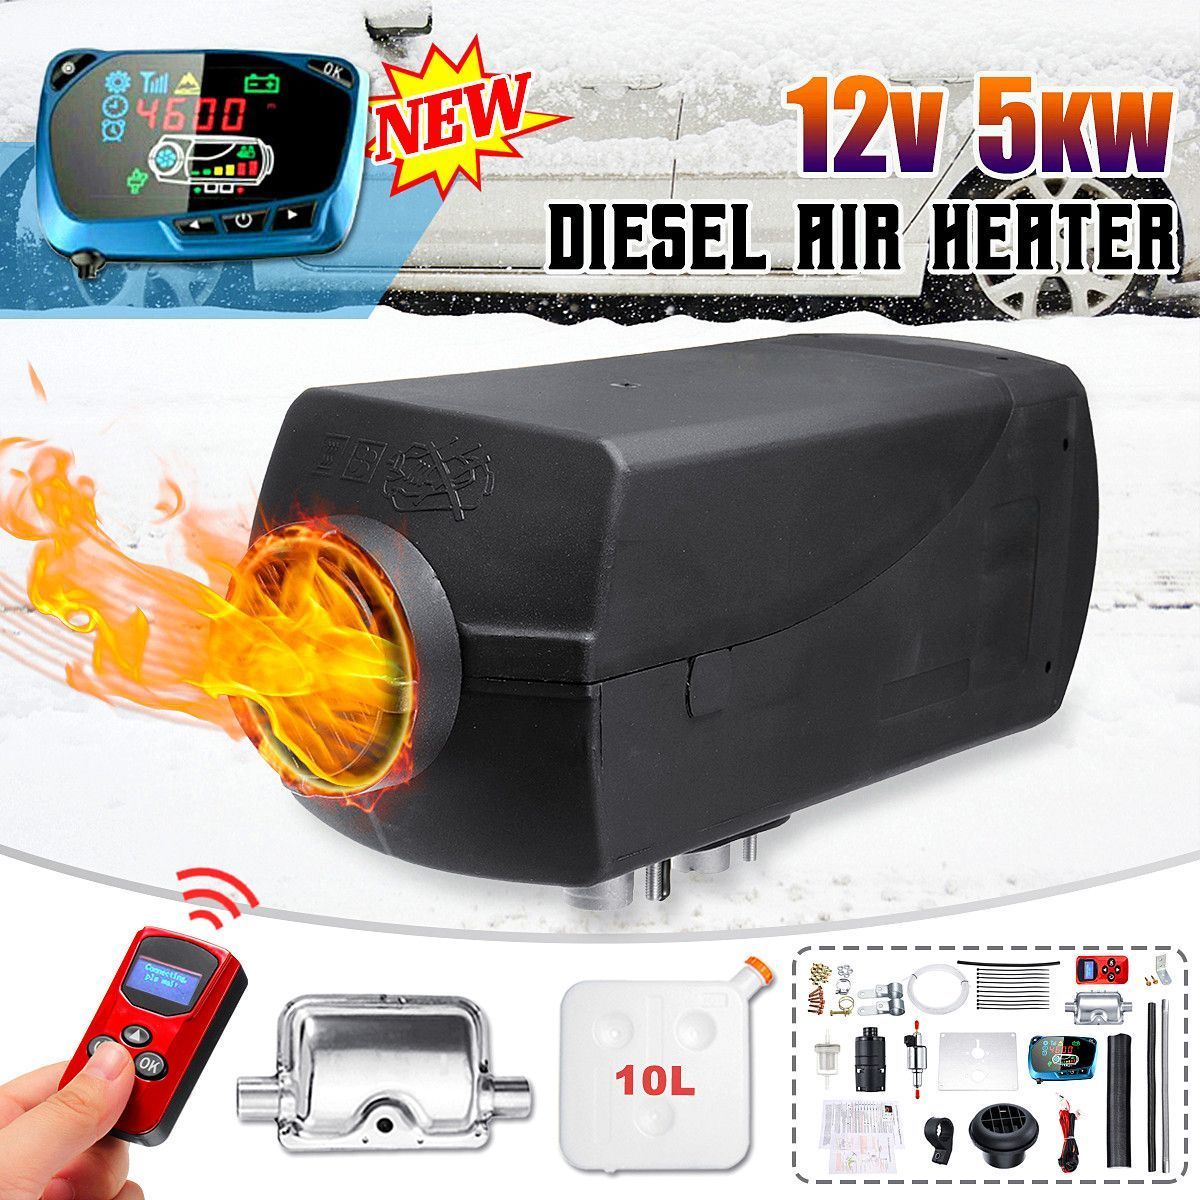 5KW12V-Diesel-Air-Heater-Upgrade-LCD-Thermostat-Parking-Heater-Warming-Equipment-Set-1379168